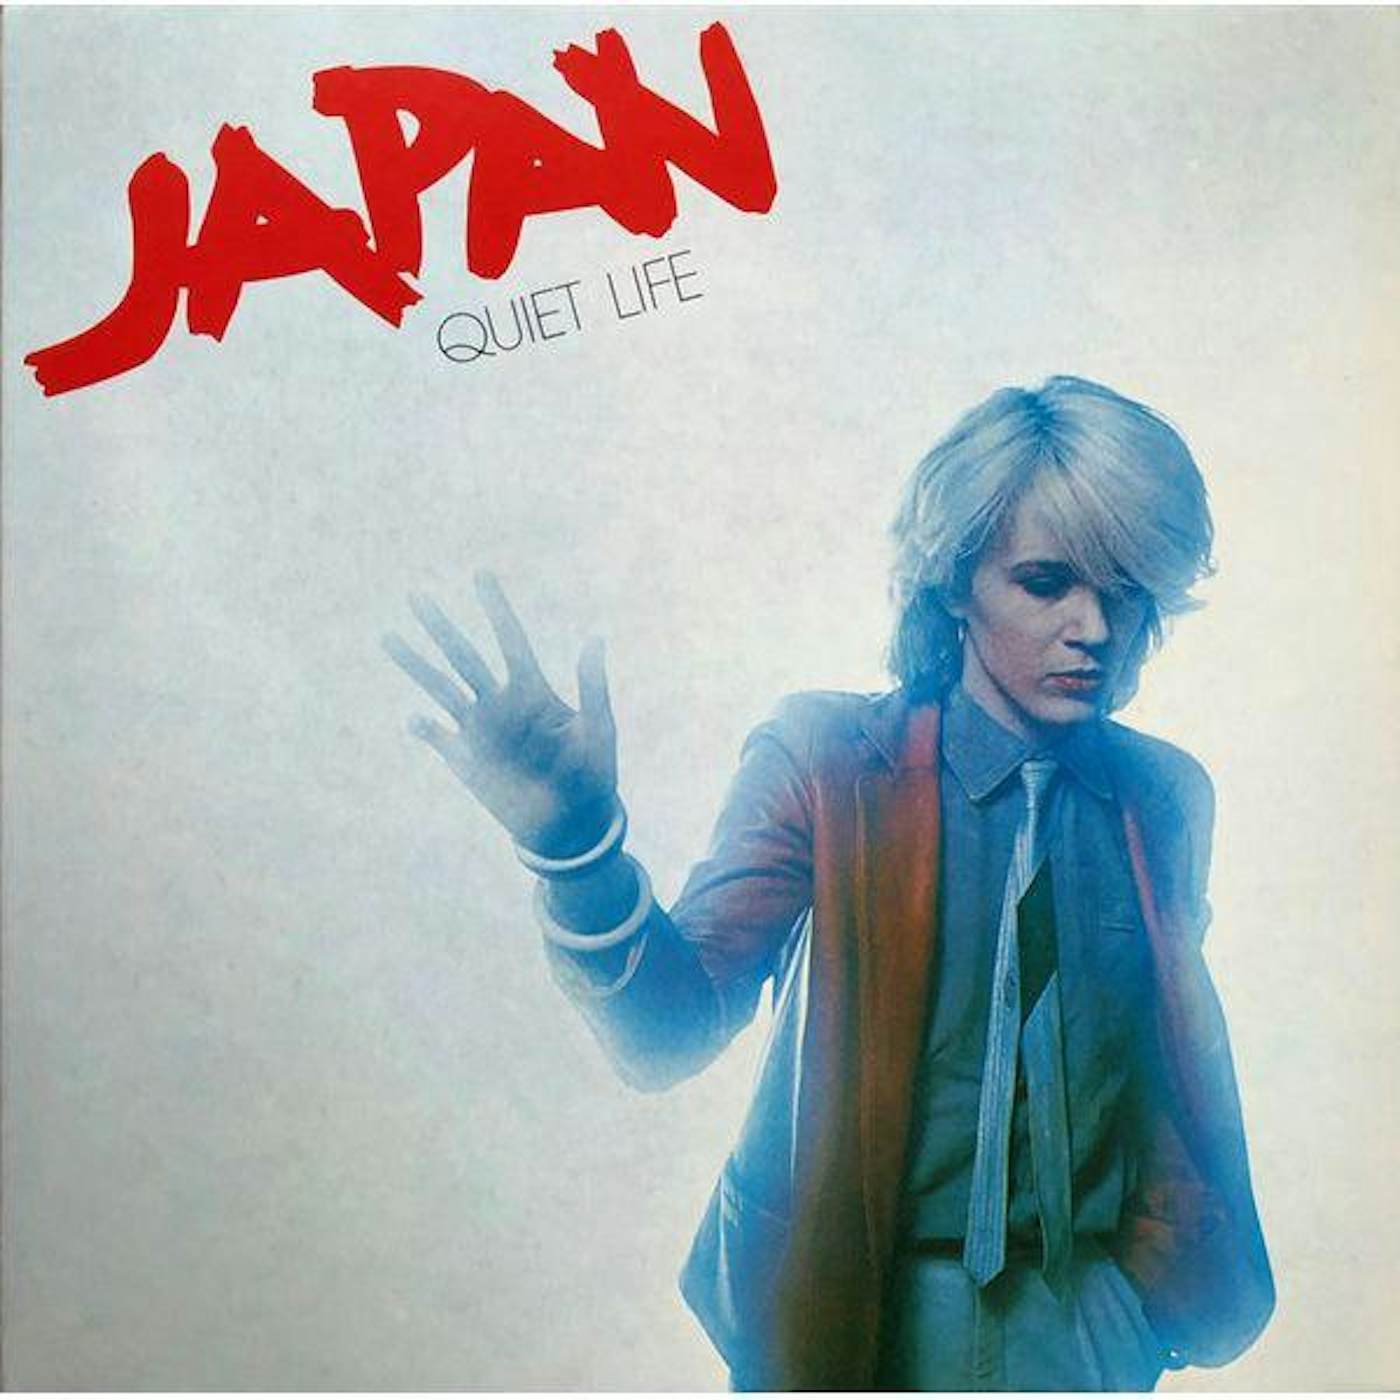 Japan Quiet Life Vinyl Record